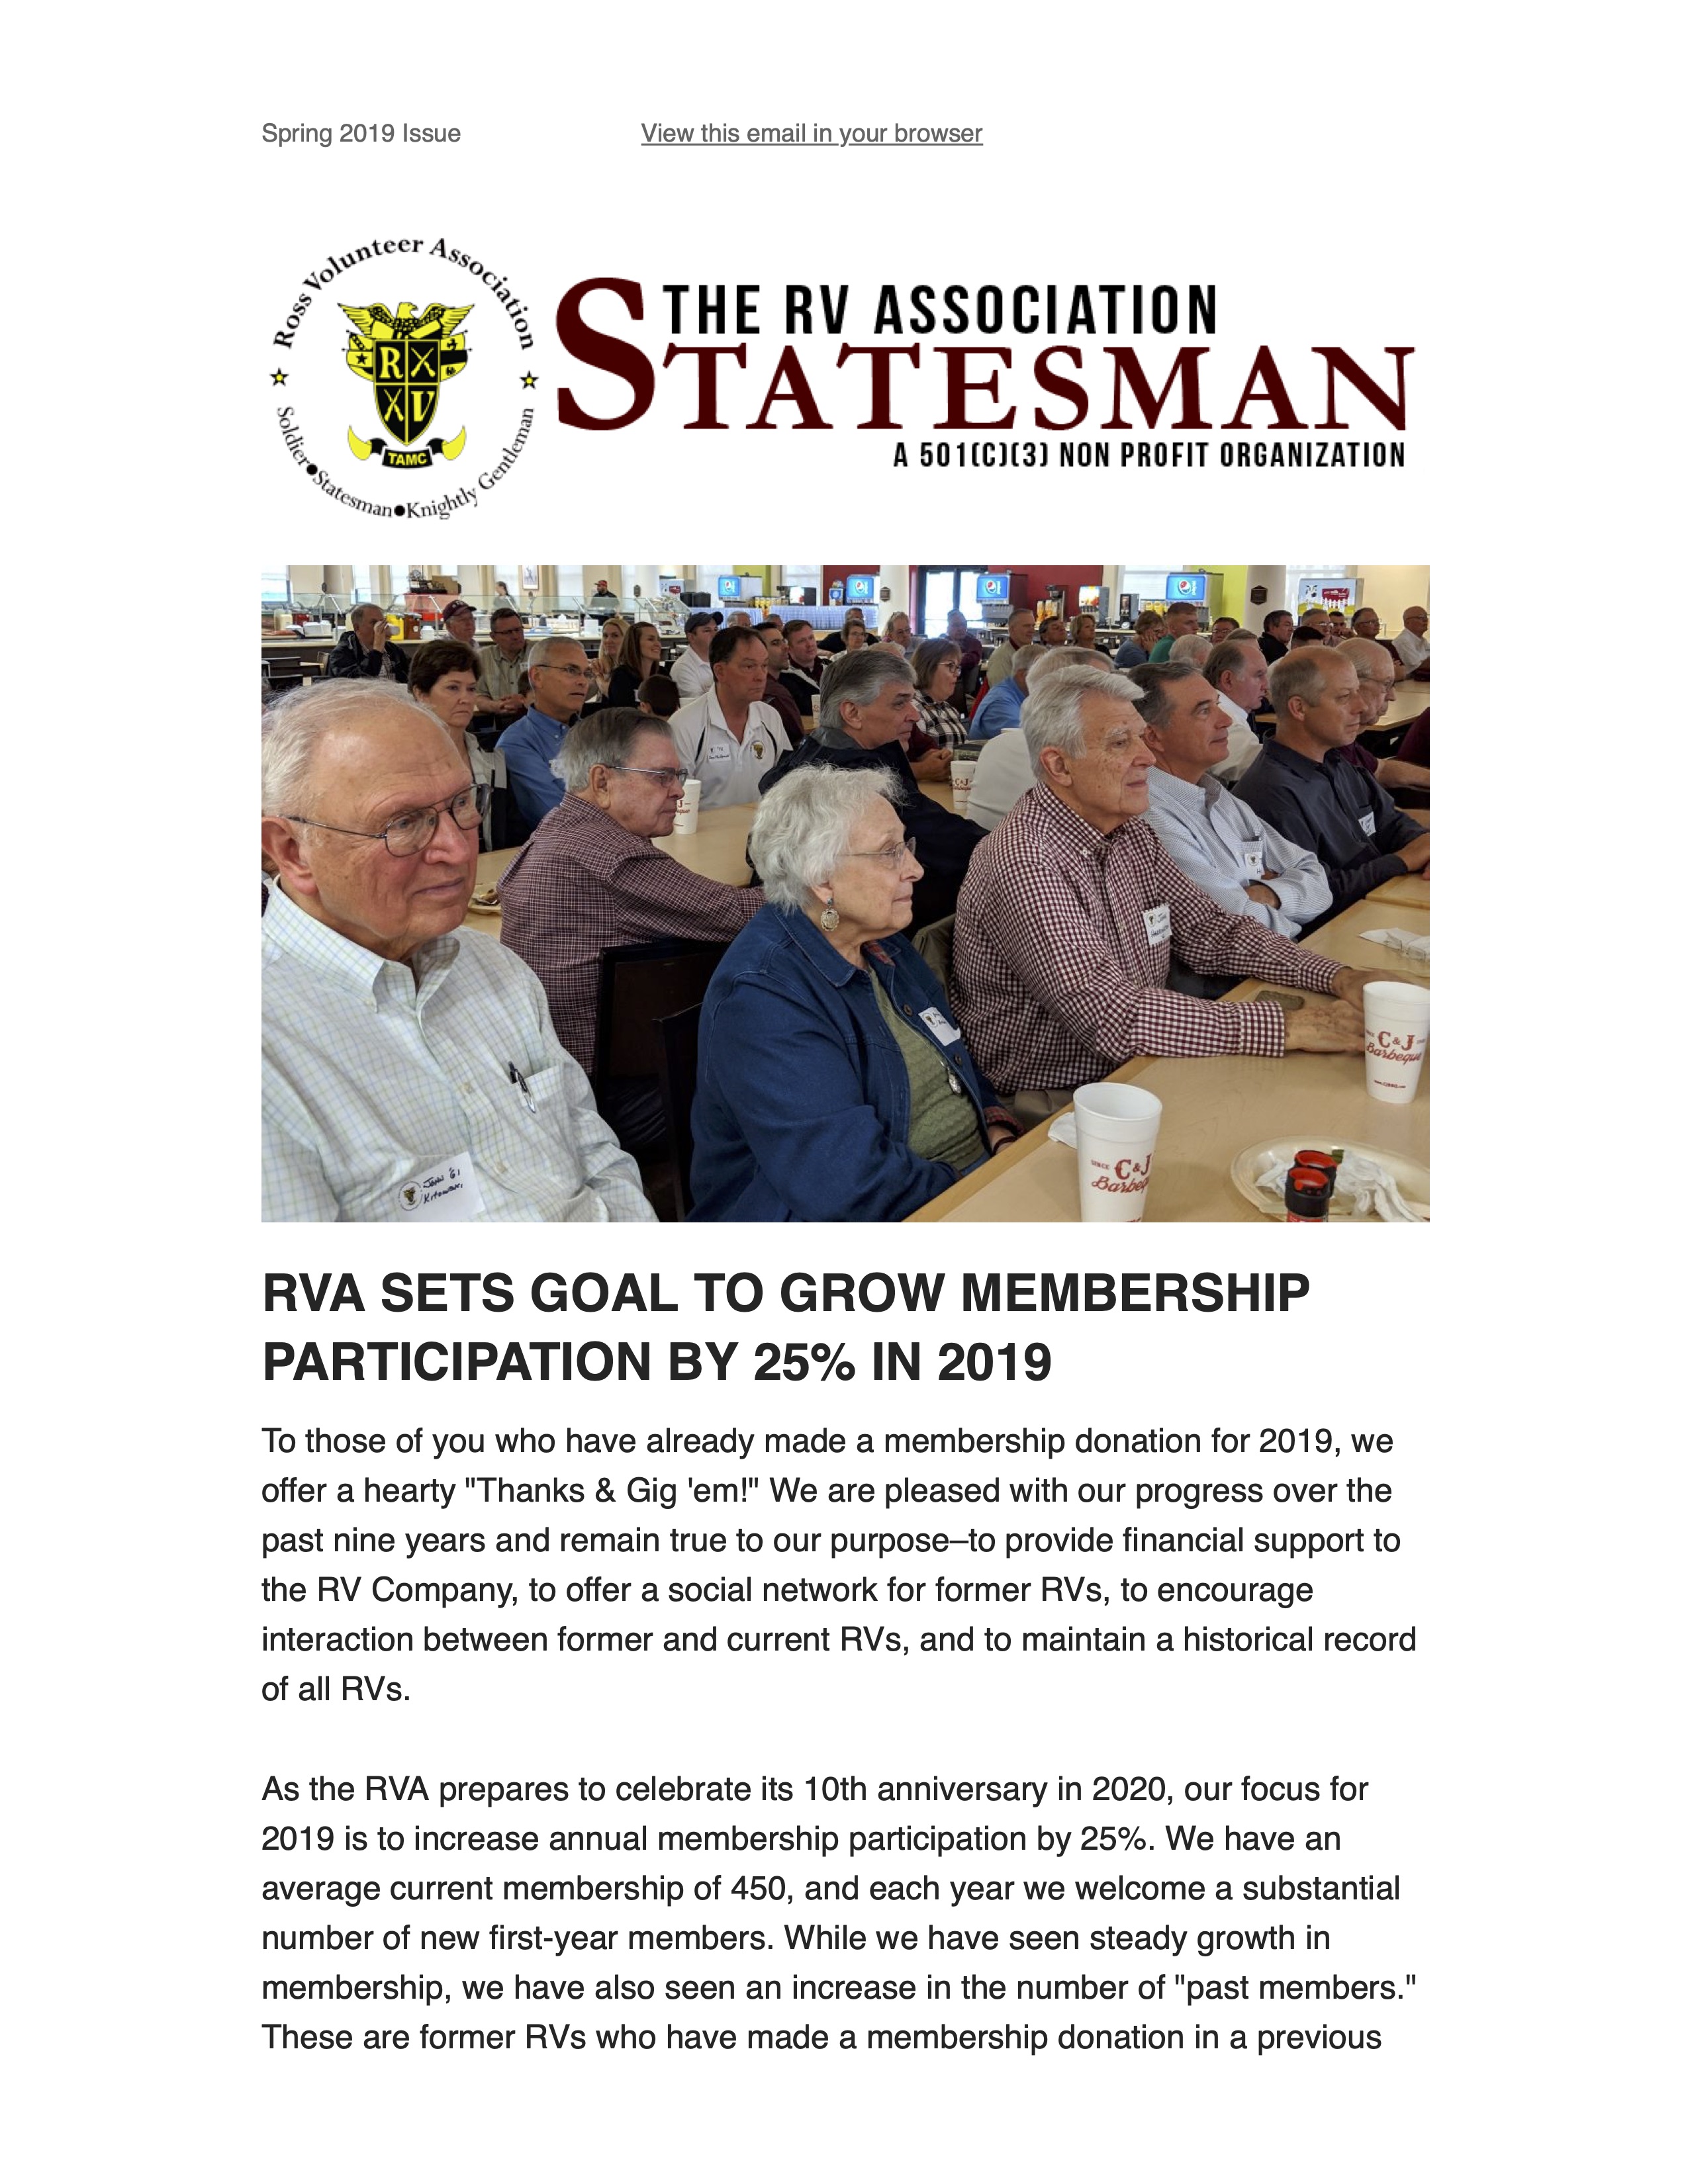 1rv-association-statesman-spring-2019-issue